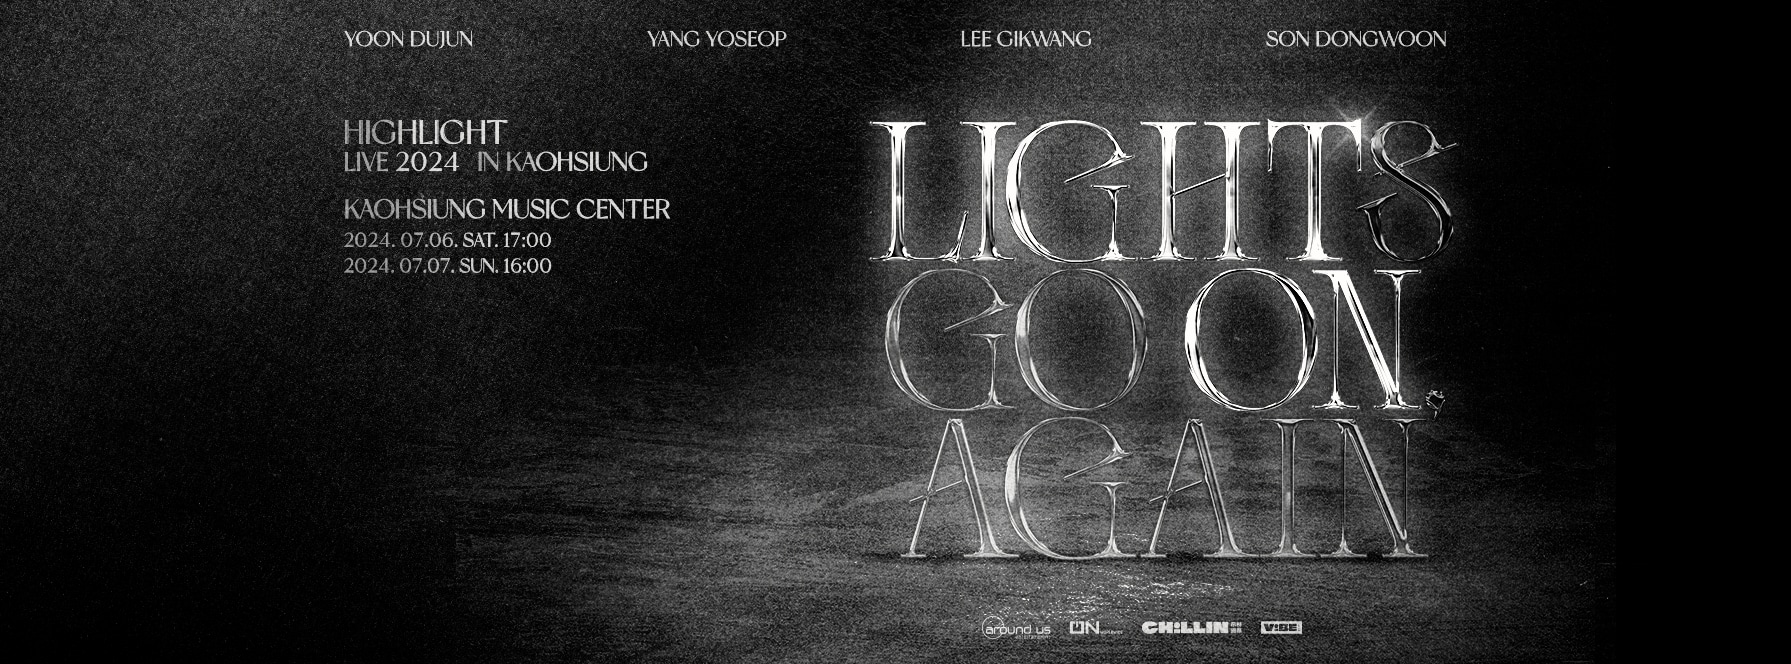 HIGHLIGHT高雄演唱會2024（加開一場）｜HIGHLIGHT LIVE 2024 [LIGHTS GO ON, AGAIN] ASIA TOUR IN KAOHSIUNG｜高雄流行音樂中心